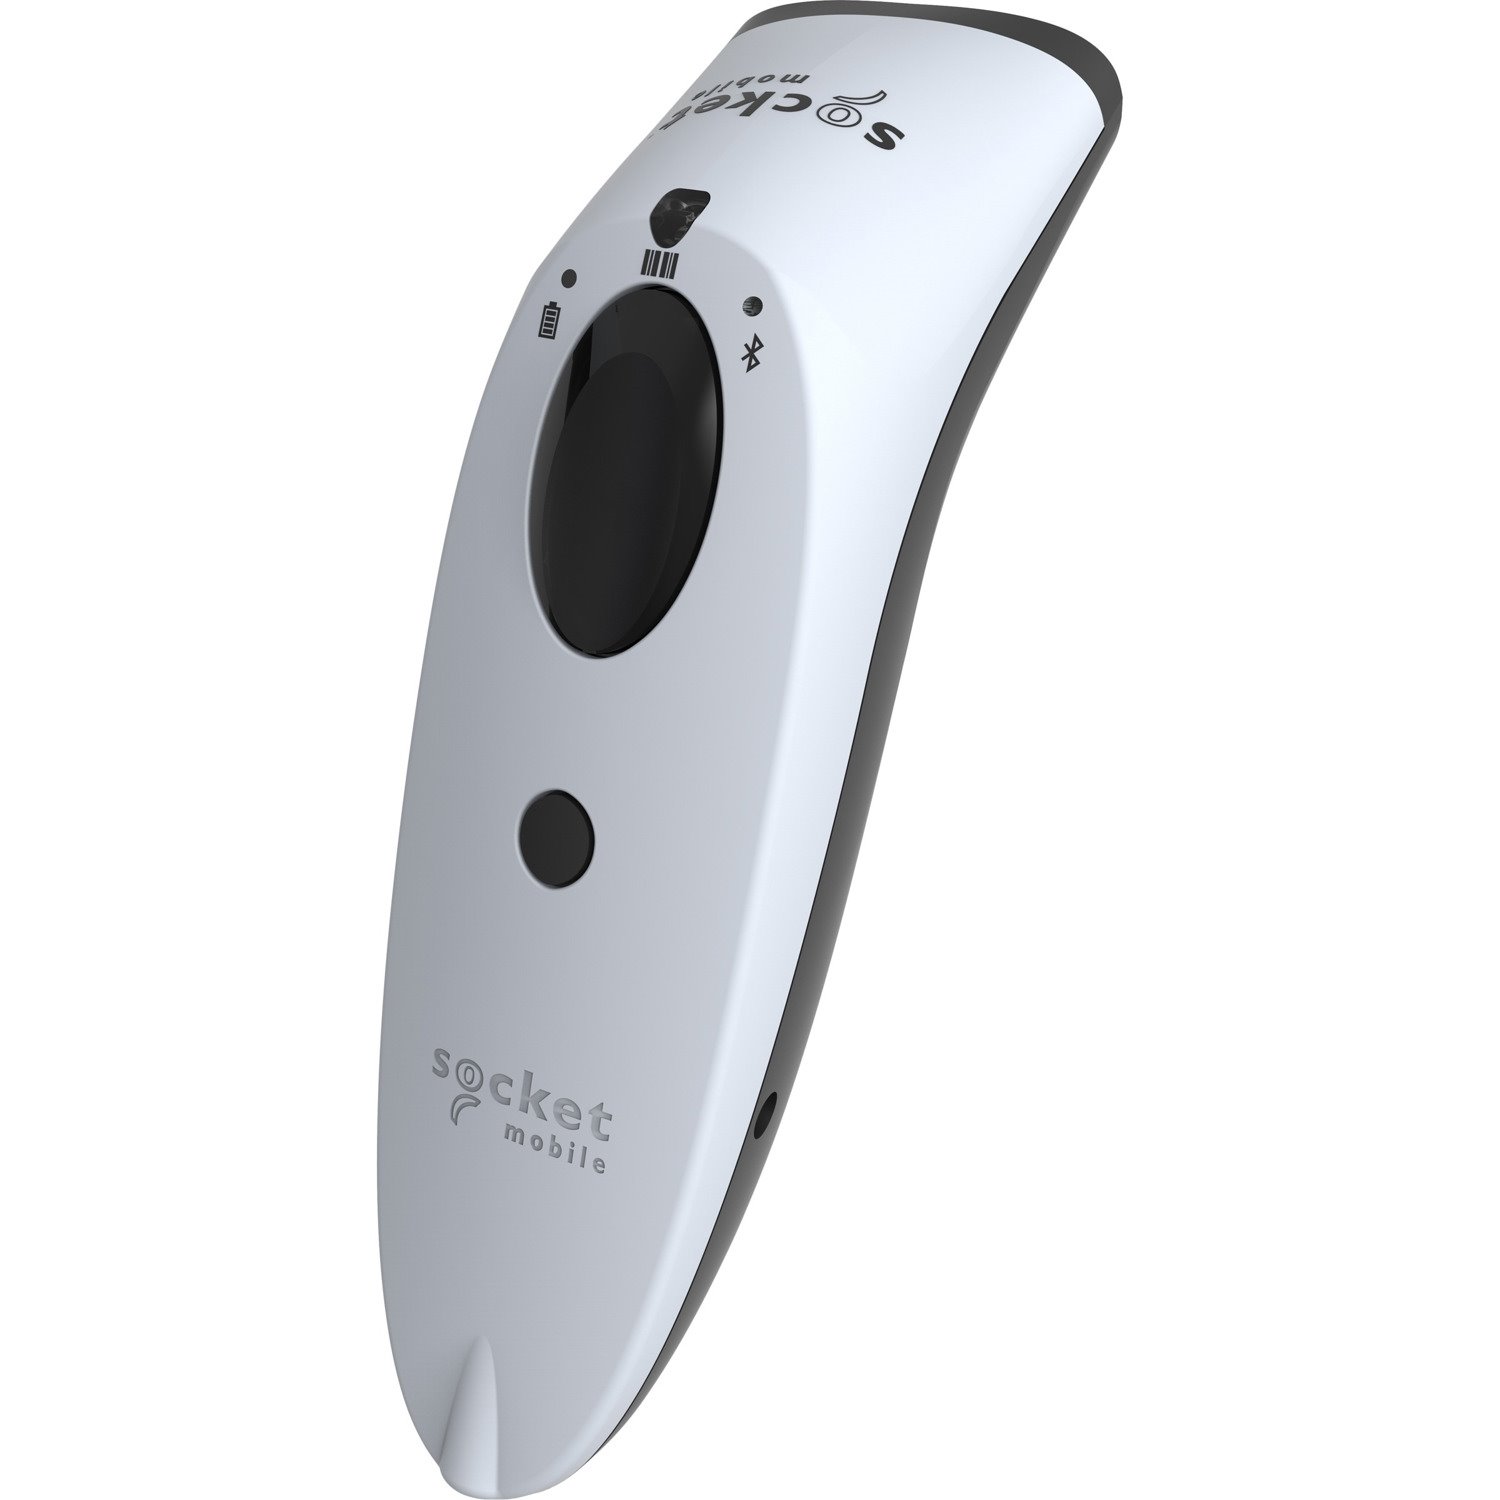 Socket Mobile SocketScan S730 Handheld Barcode Scanner - Wireless Connectivity - White